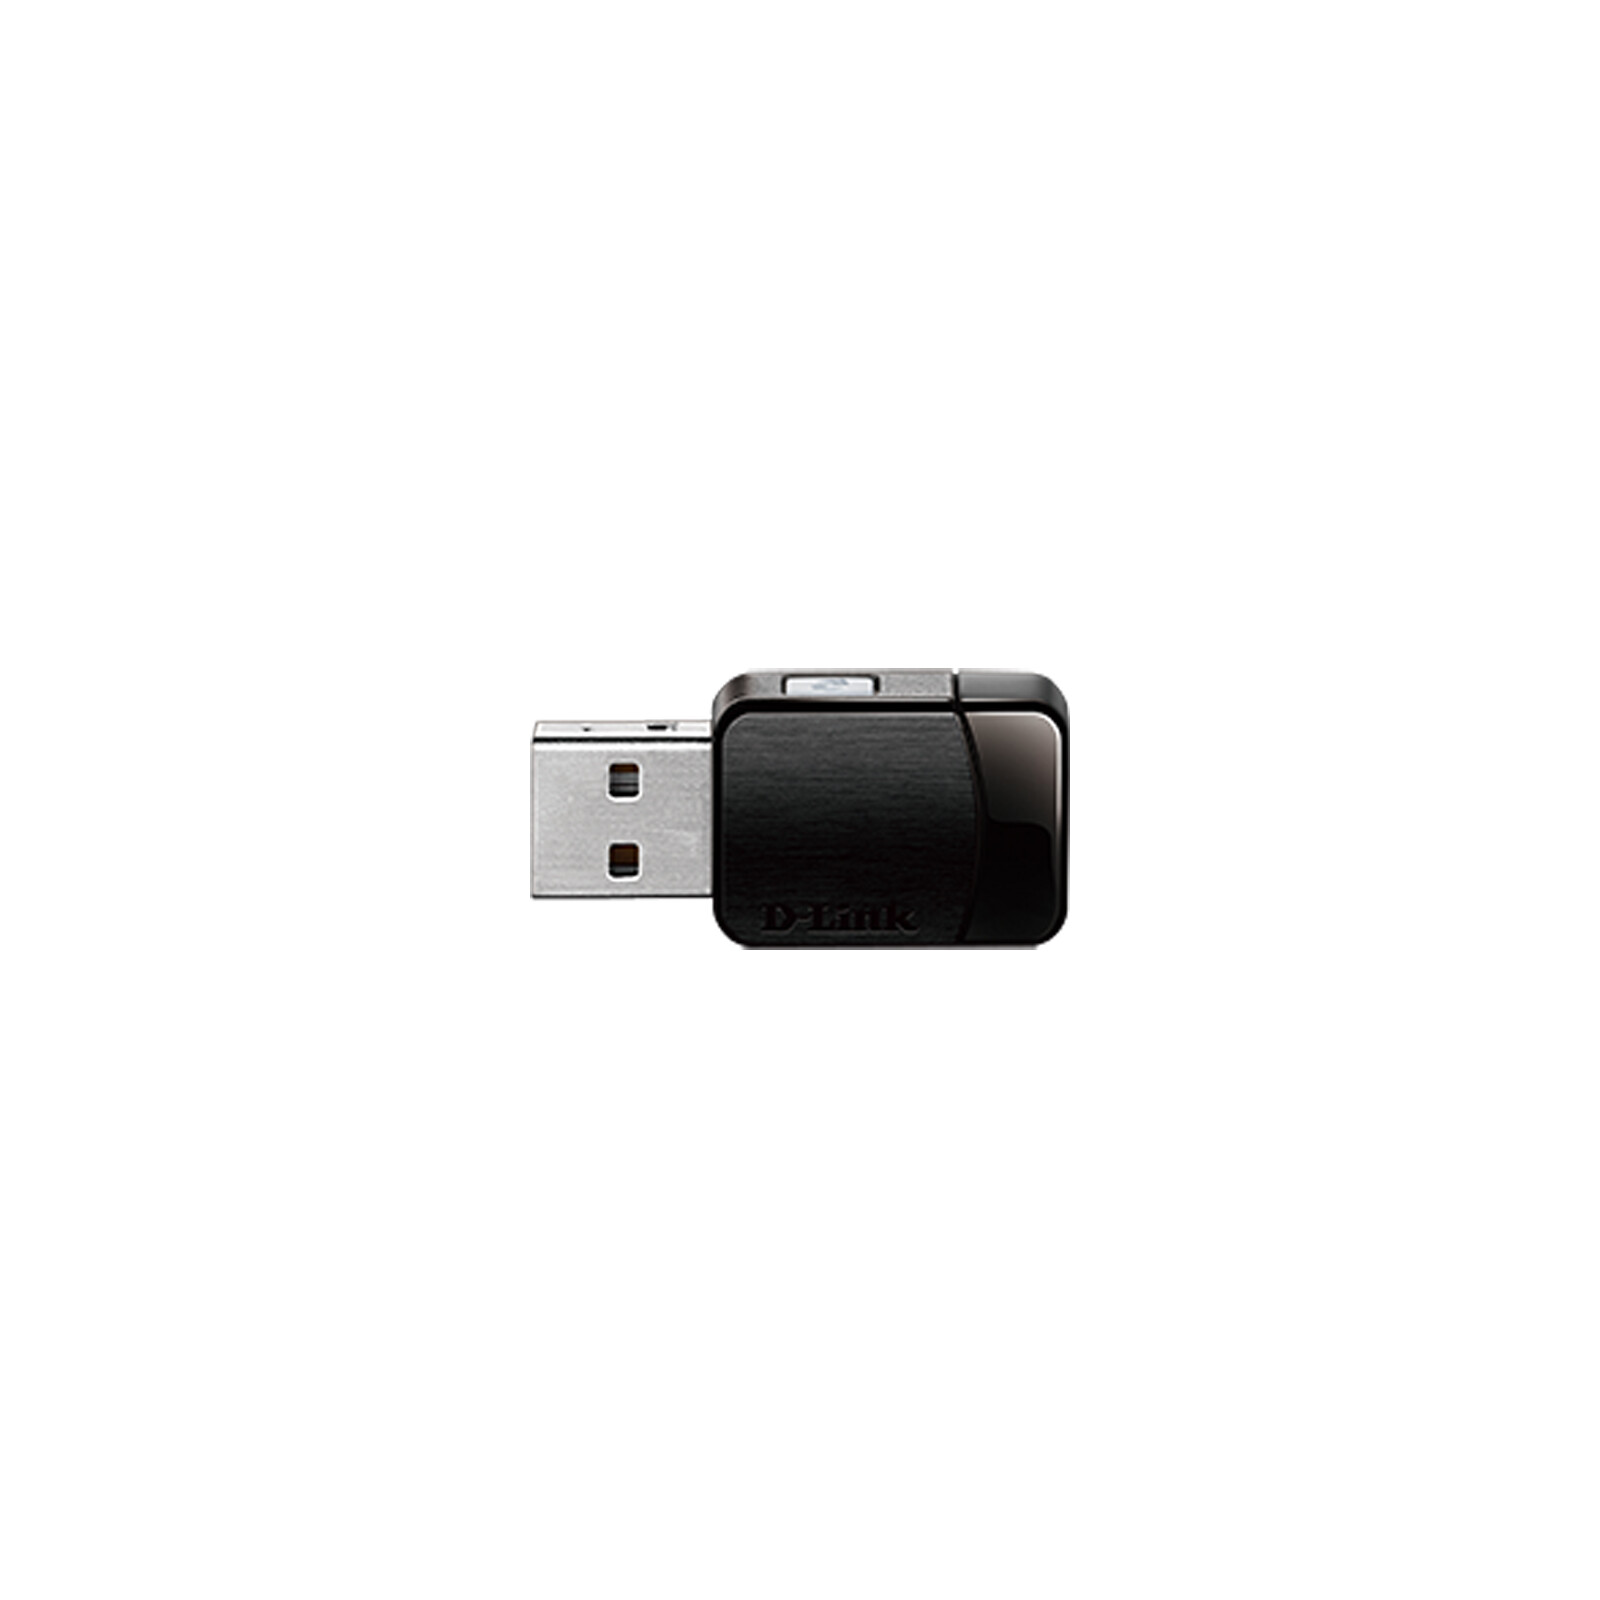 D-Link Wireless 11AC Nano USB Adapter